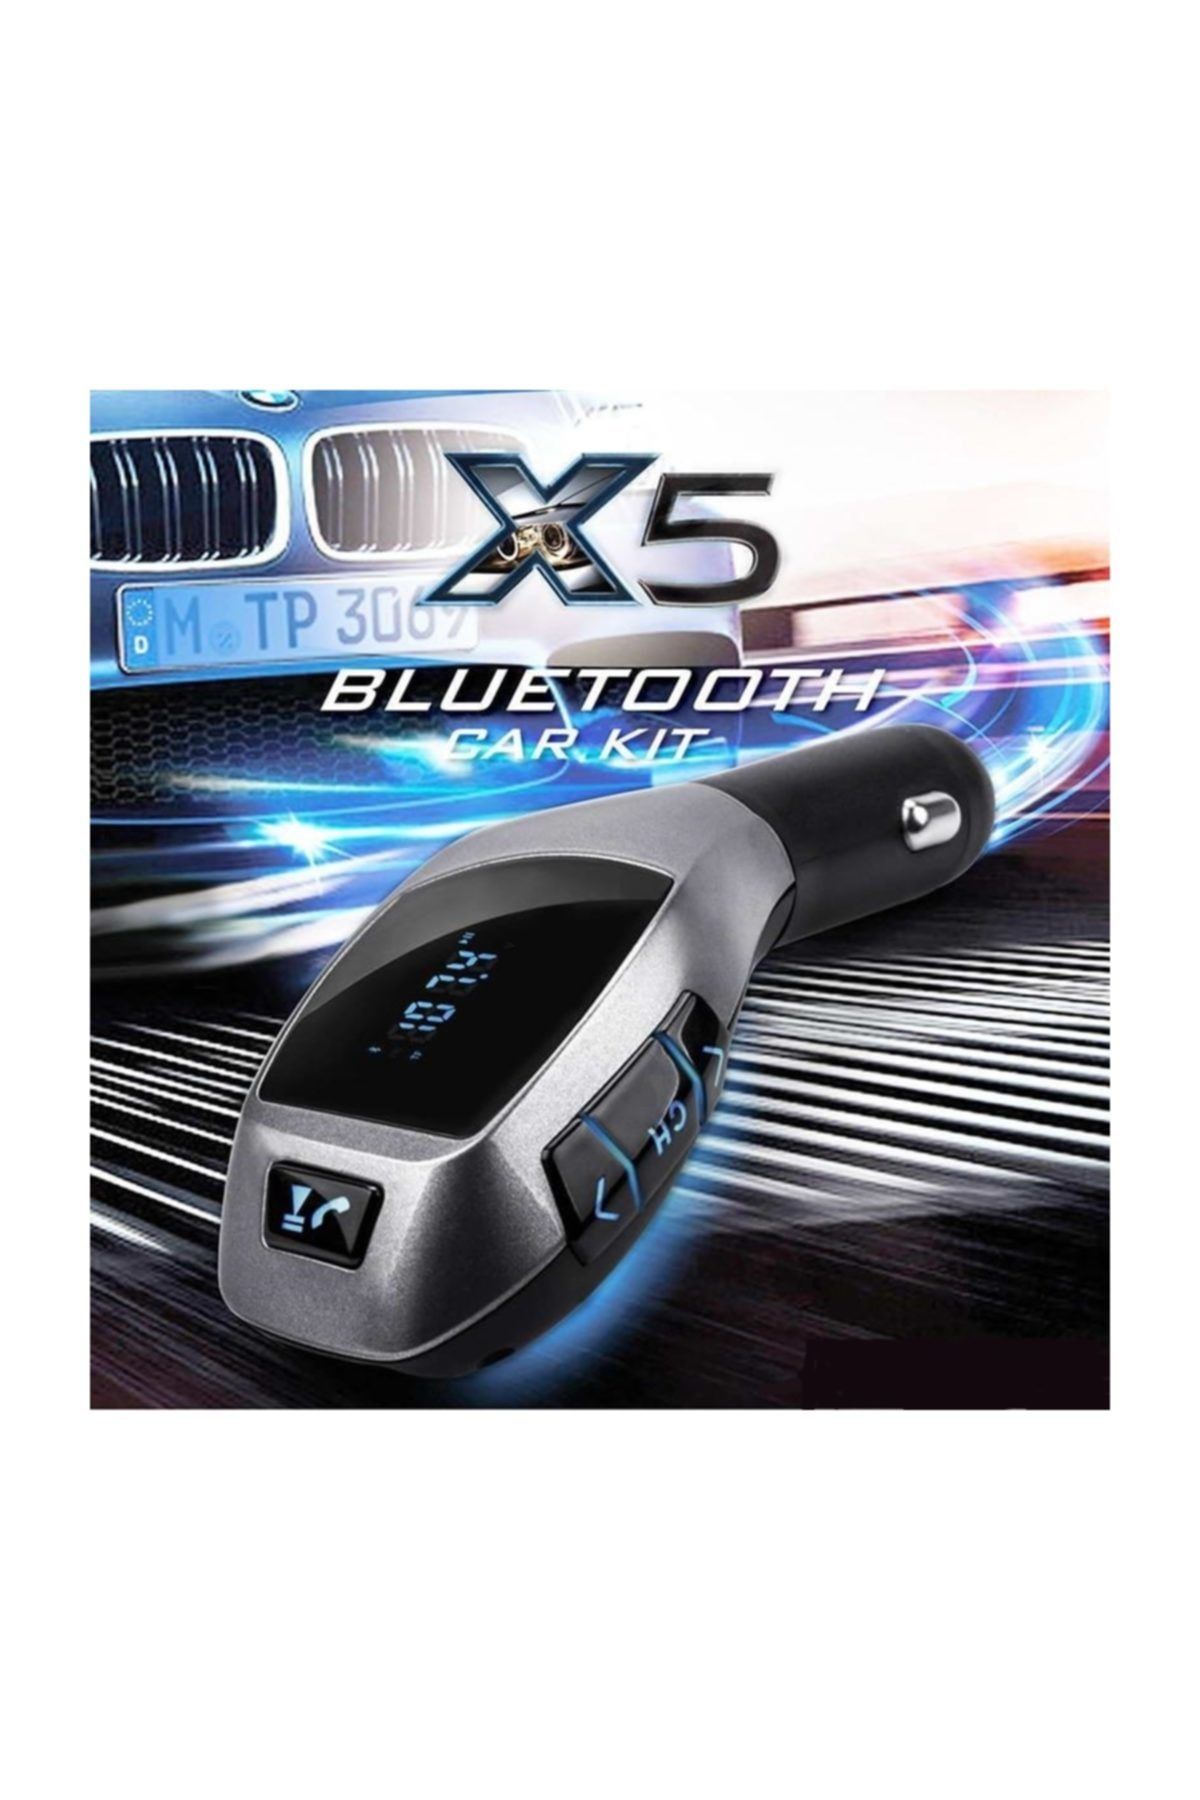 Skygo X5 Bluetooth Araç Kiti Fm Transmitter